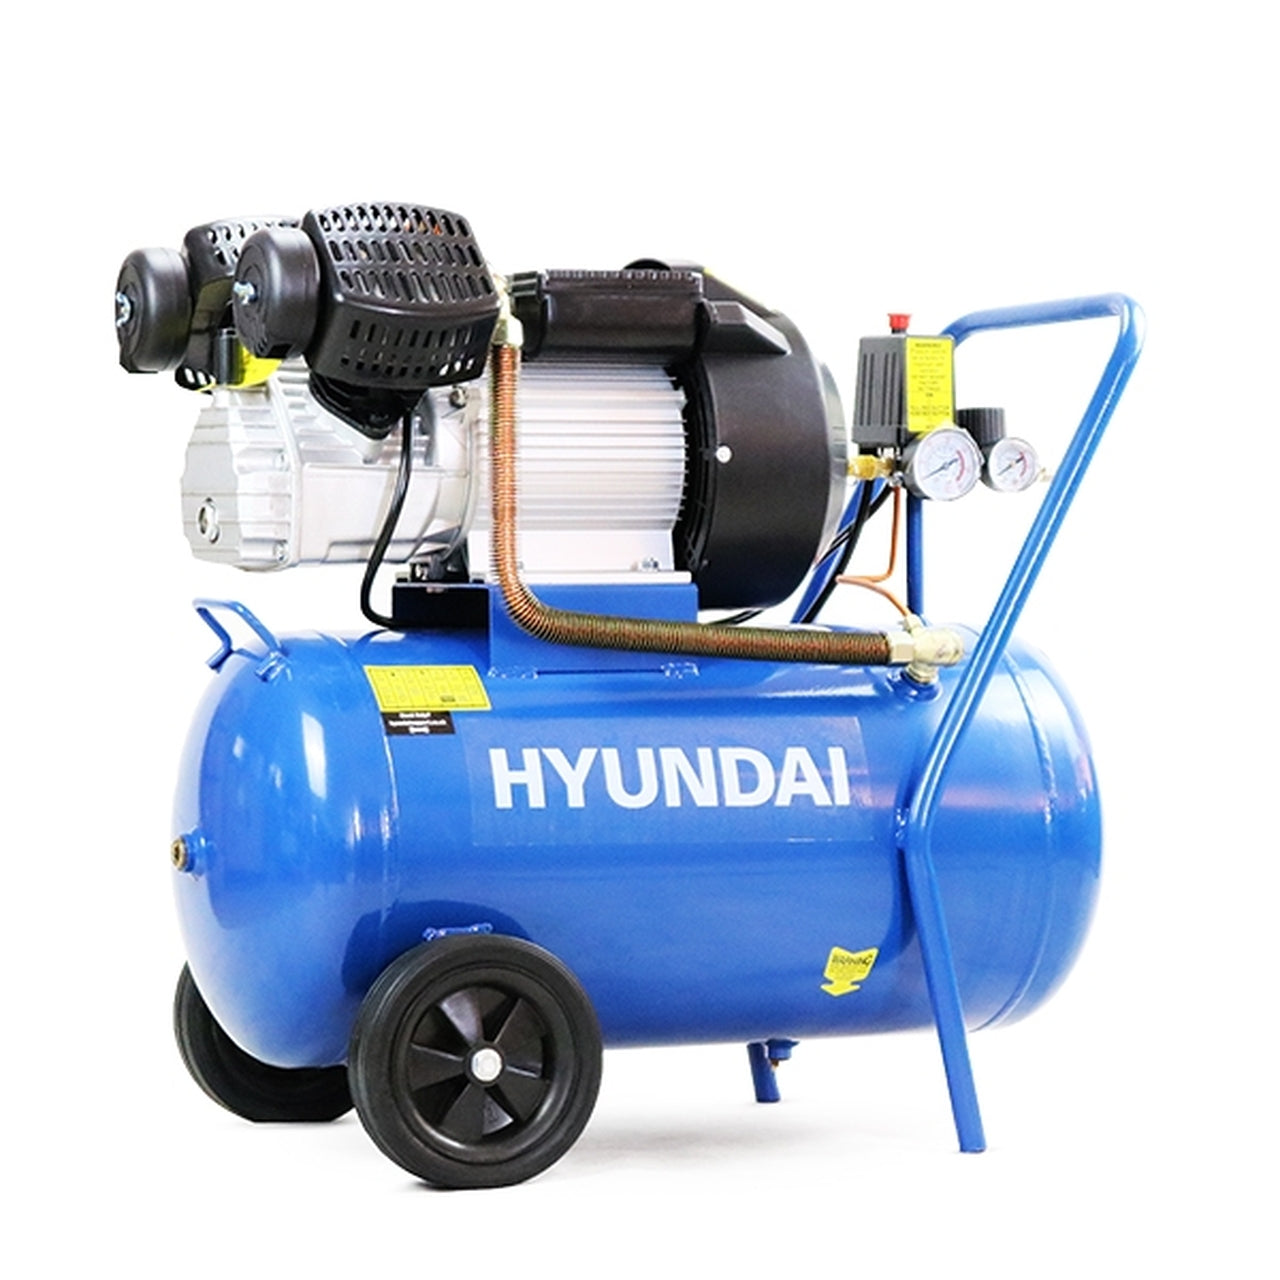 Hyundai-HY3050V-50-Litre-Direct-Drive-V-Twin-Air-Compressor,-14CFM/116psi,-3HP